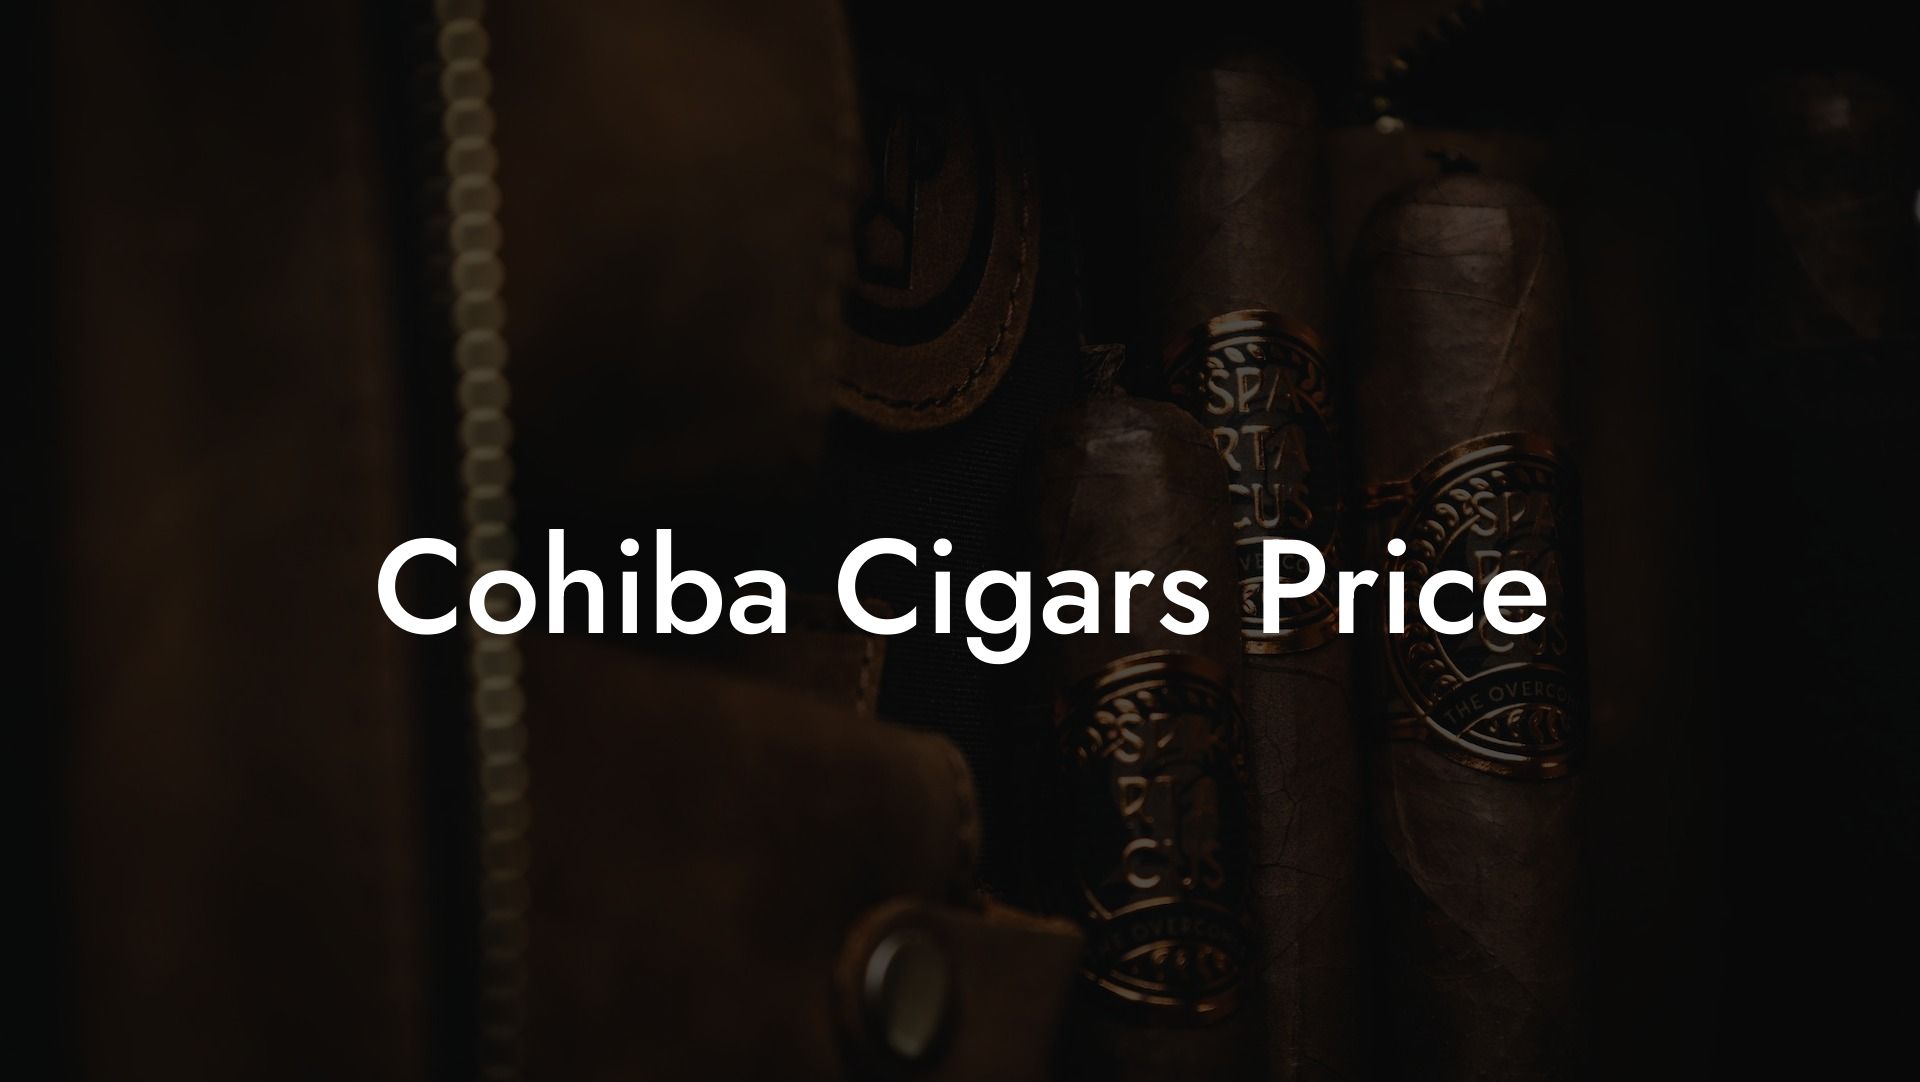 Cohiba Cigars Price